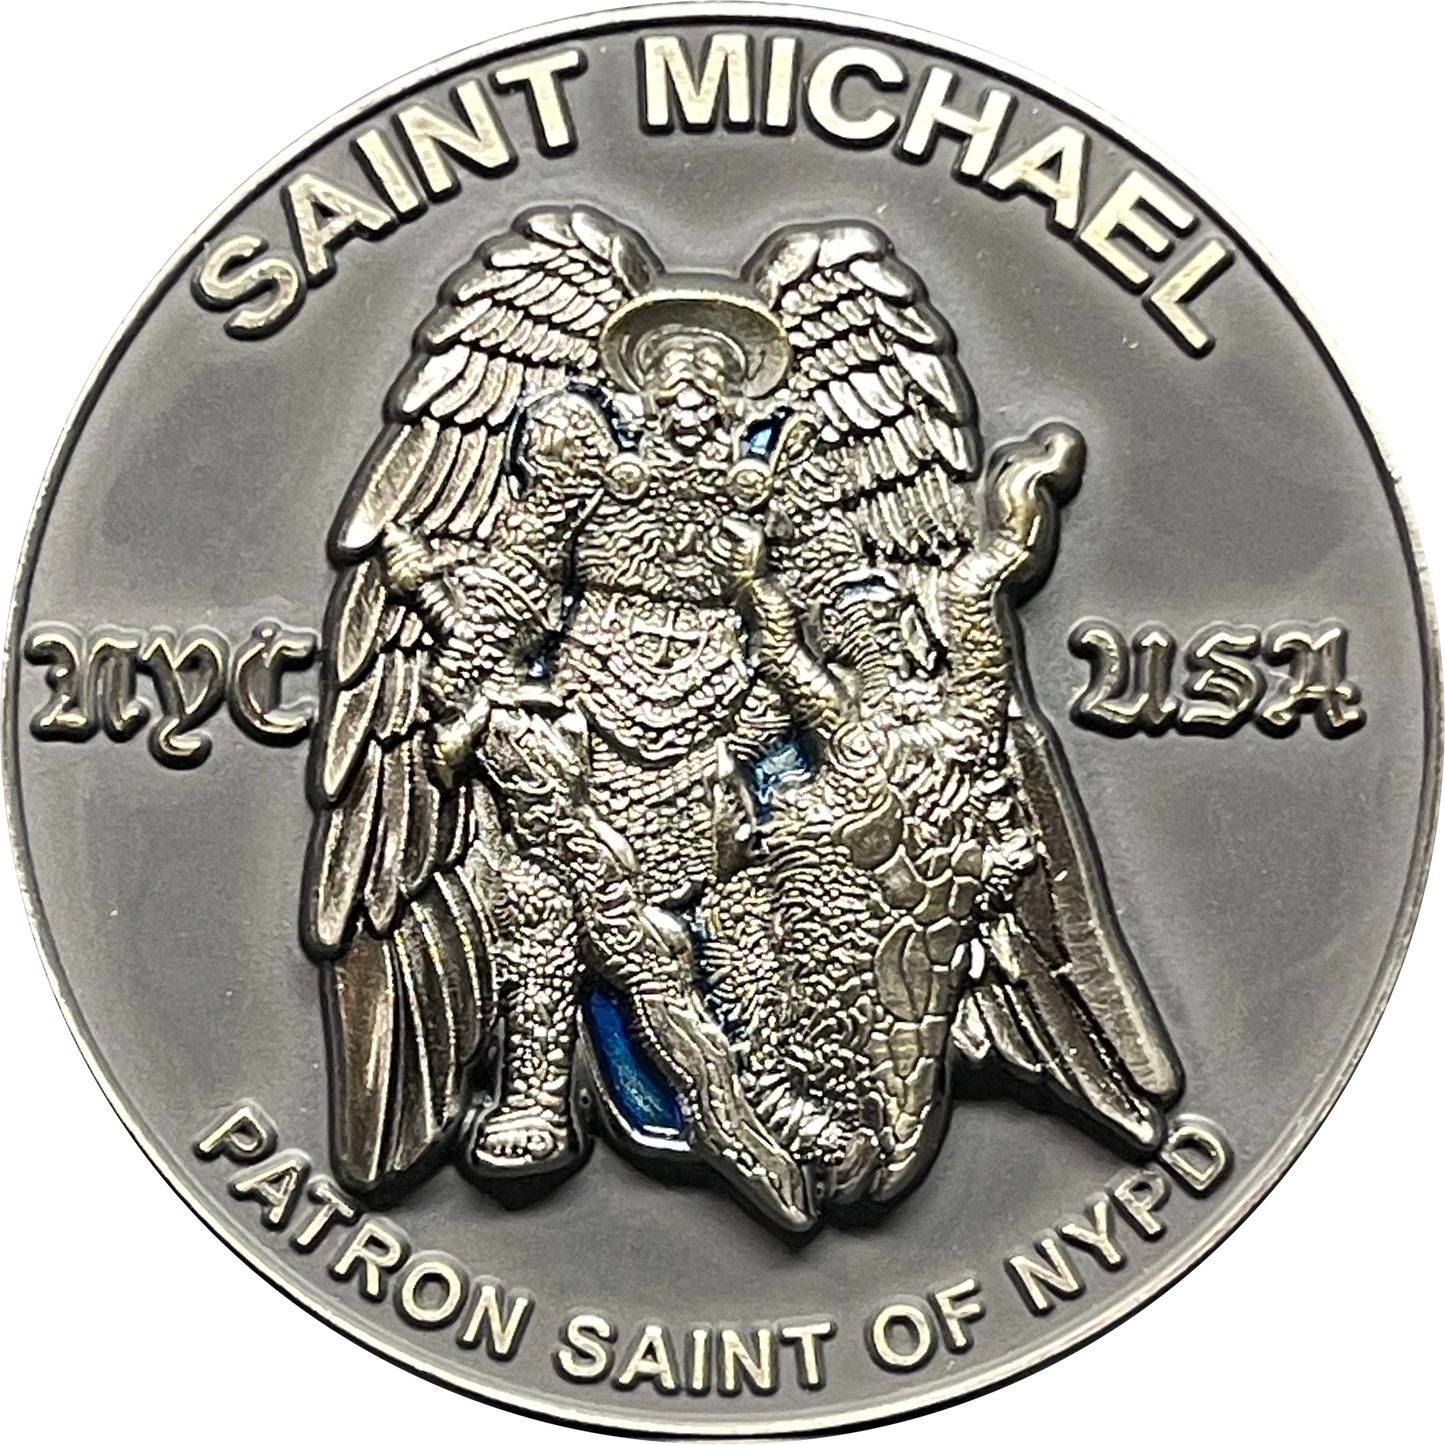 BL15-012 New York City Police Department Officer Saint Michael Patron Saint Challenge Coin ST. MICHAEL